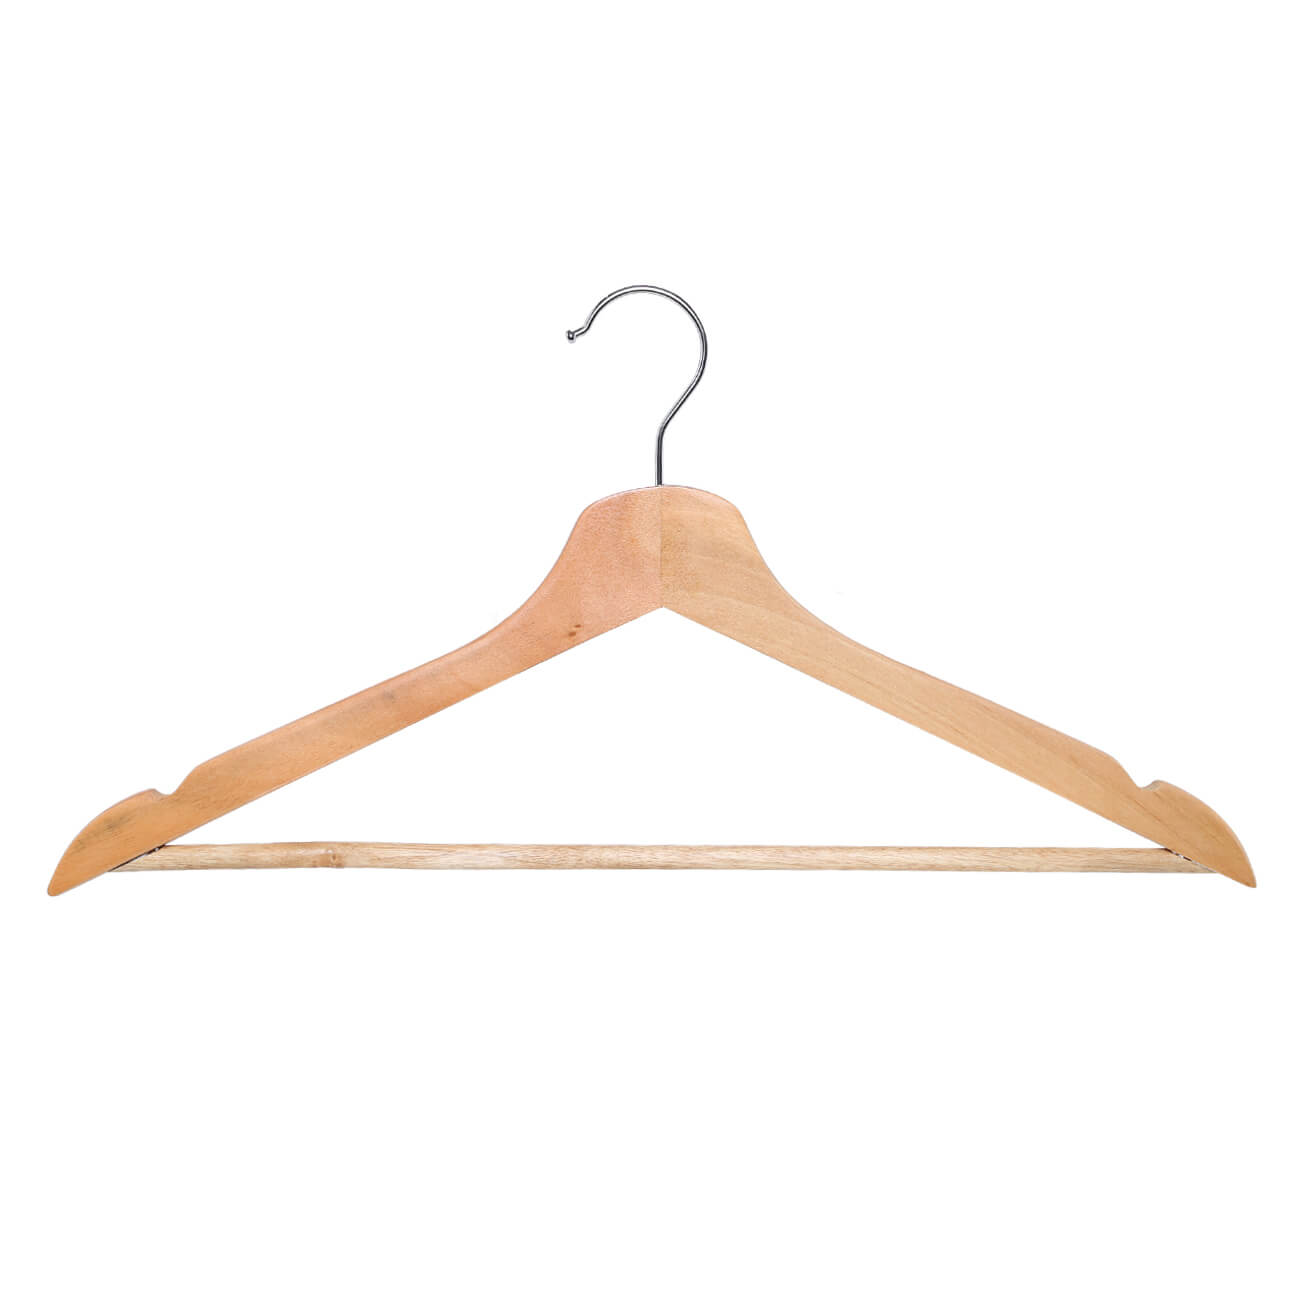 Hanger, 43 cm, 3 pieces, wood, natural, Eco life изображение № 1